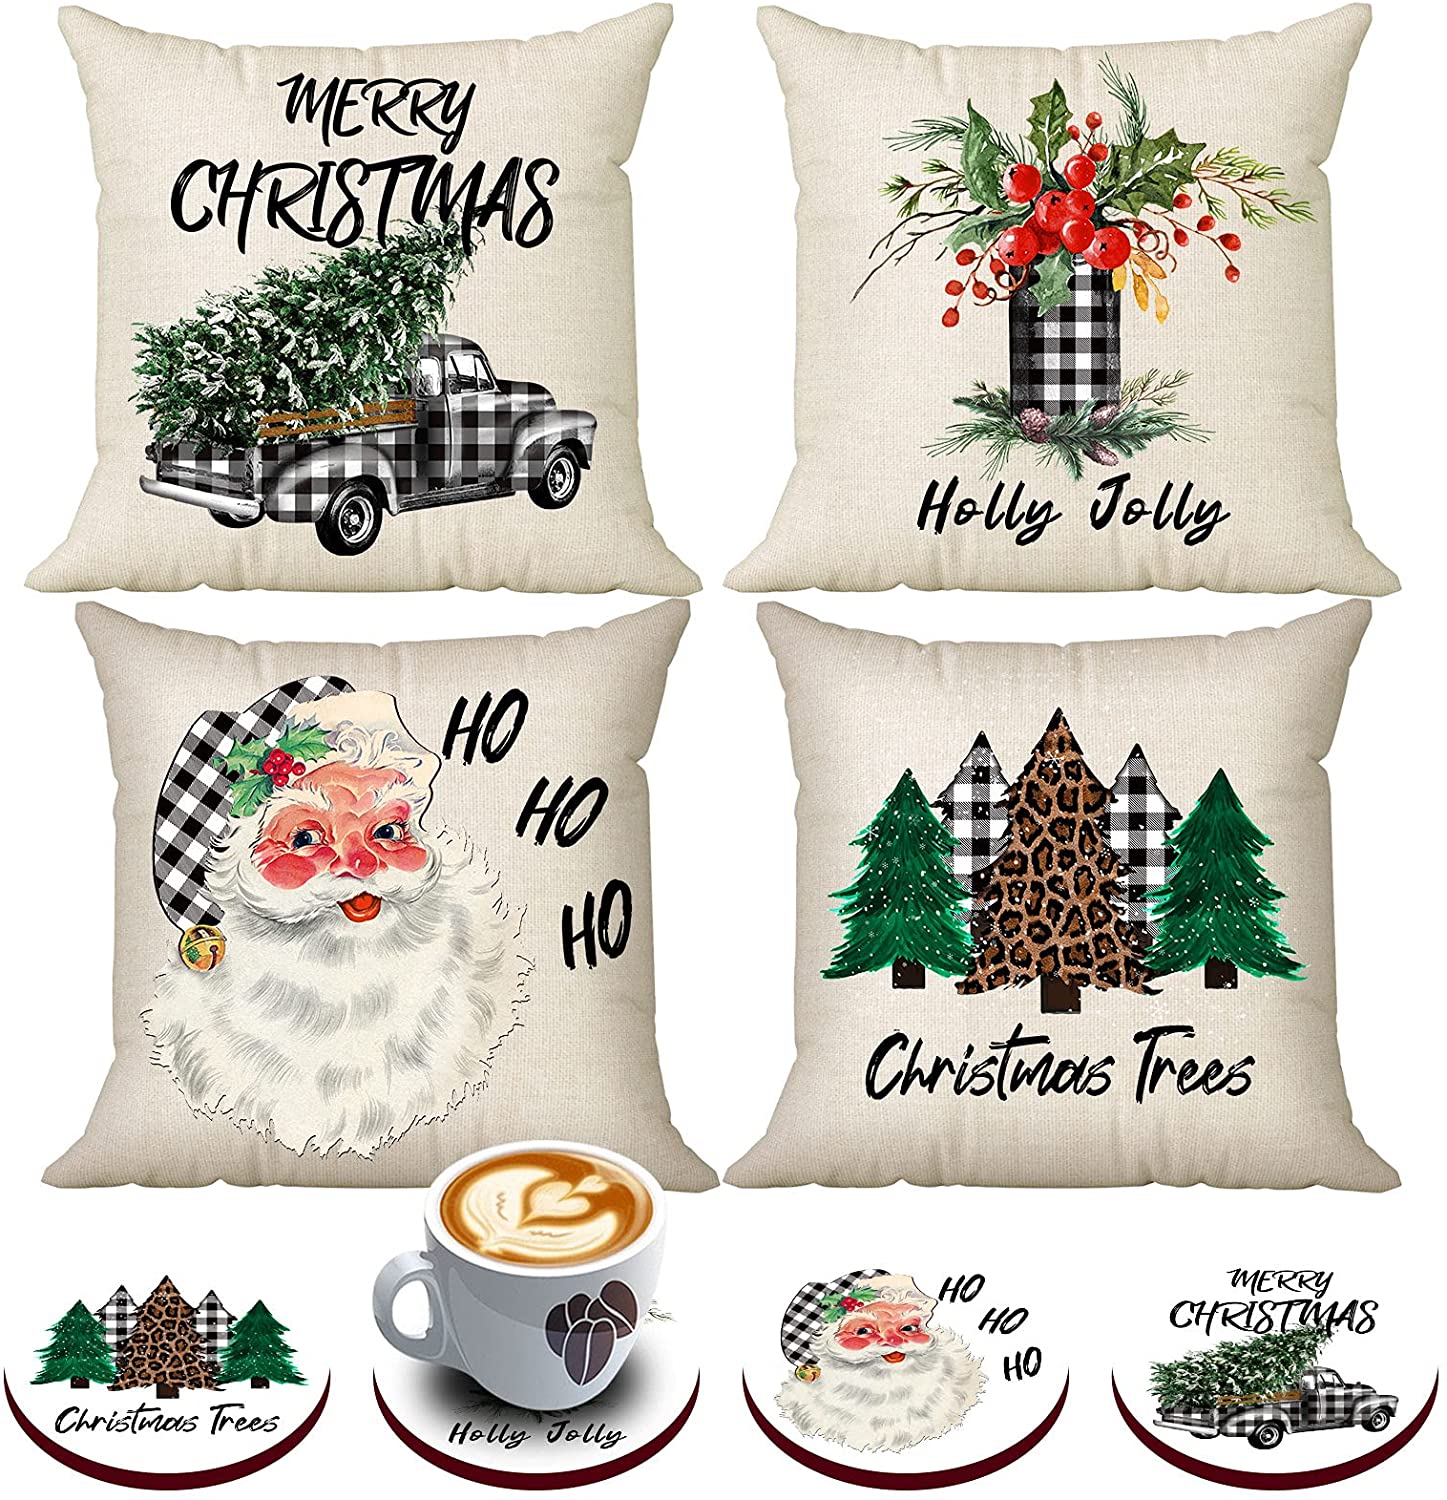 Set of 4 Christmas Pillows Covers 18 x 18 with 4 Bonus Coasters (Santa, Truck)